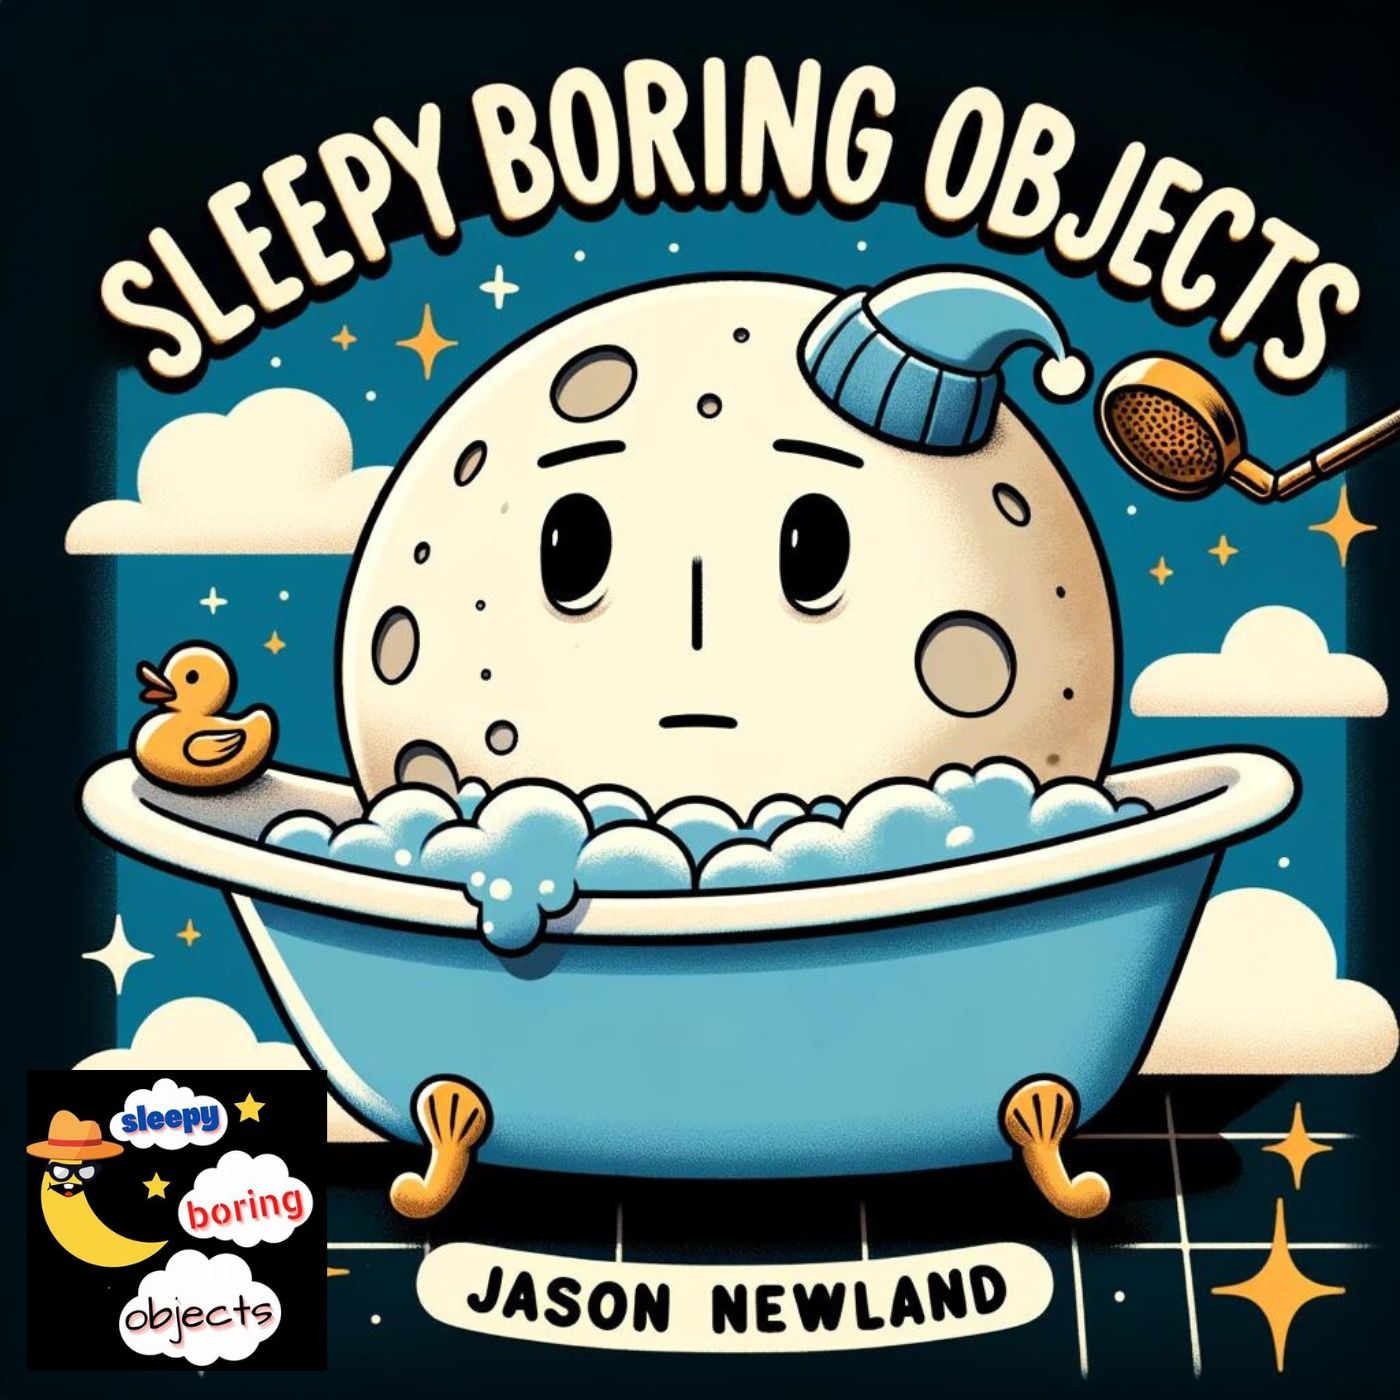 #23 “Baths” SLEEPY Boring Objects (Jason Newland) (19th October 2021)